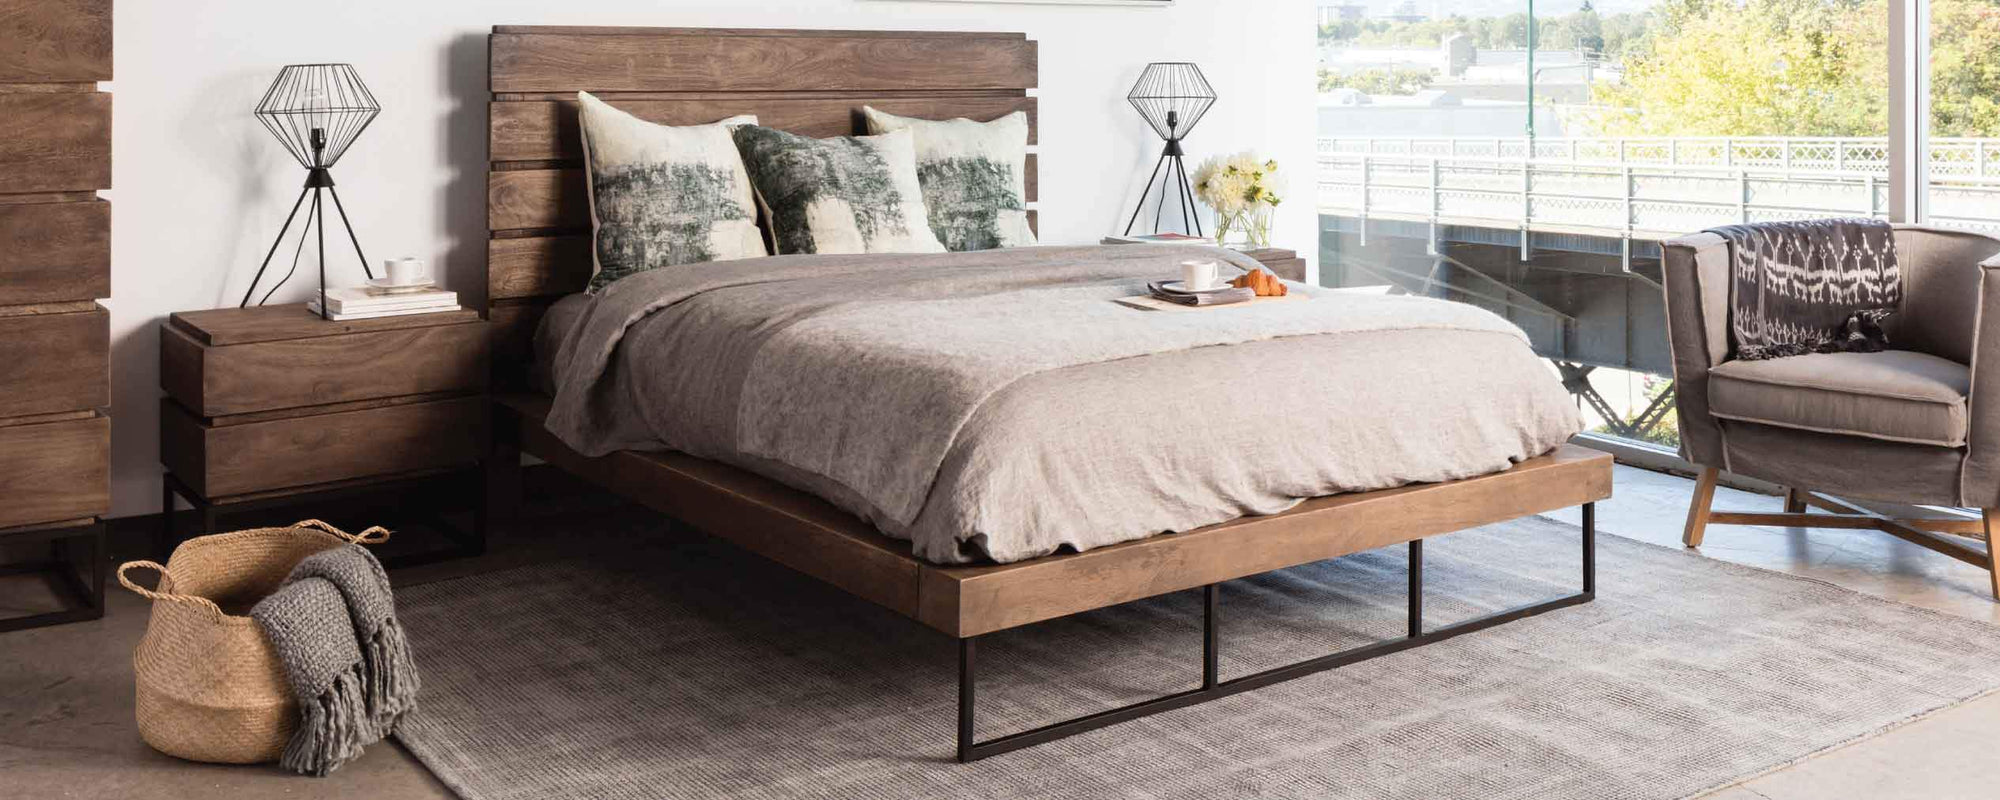 industrial bedroom furniture australia